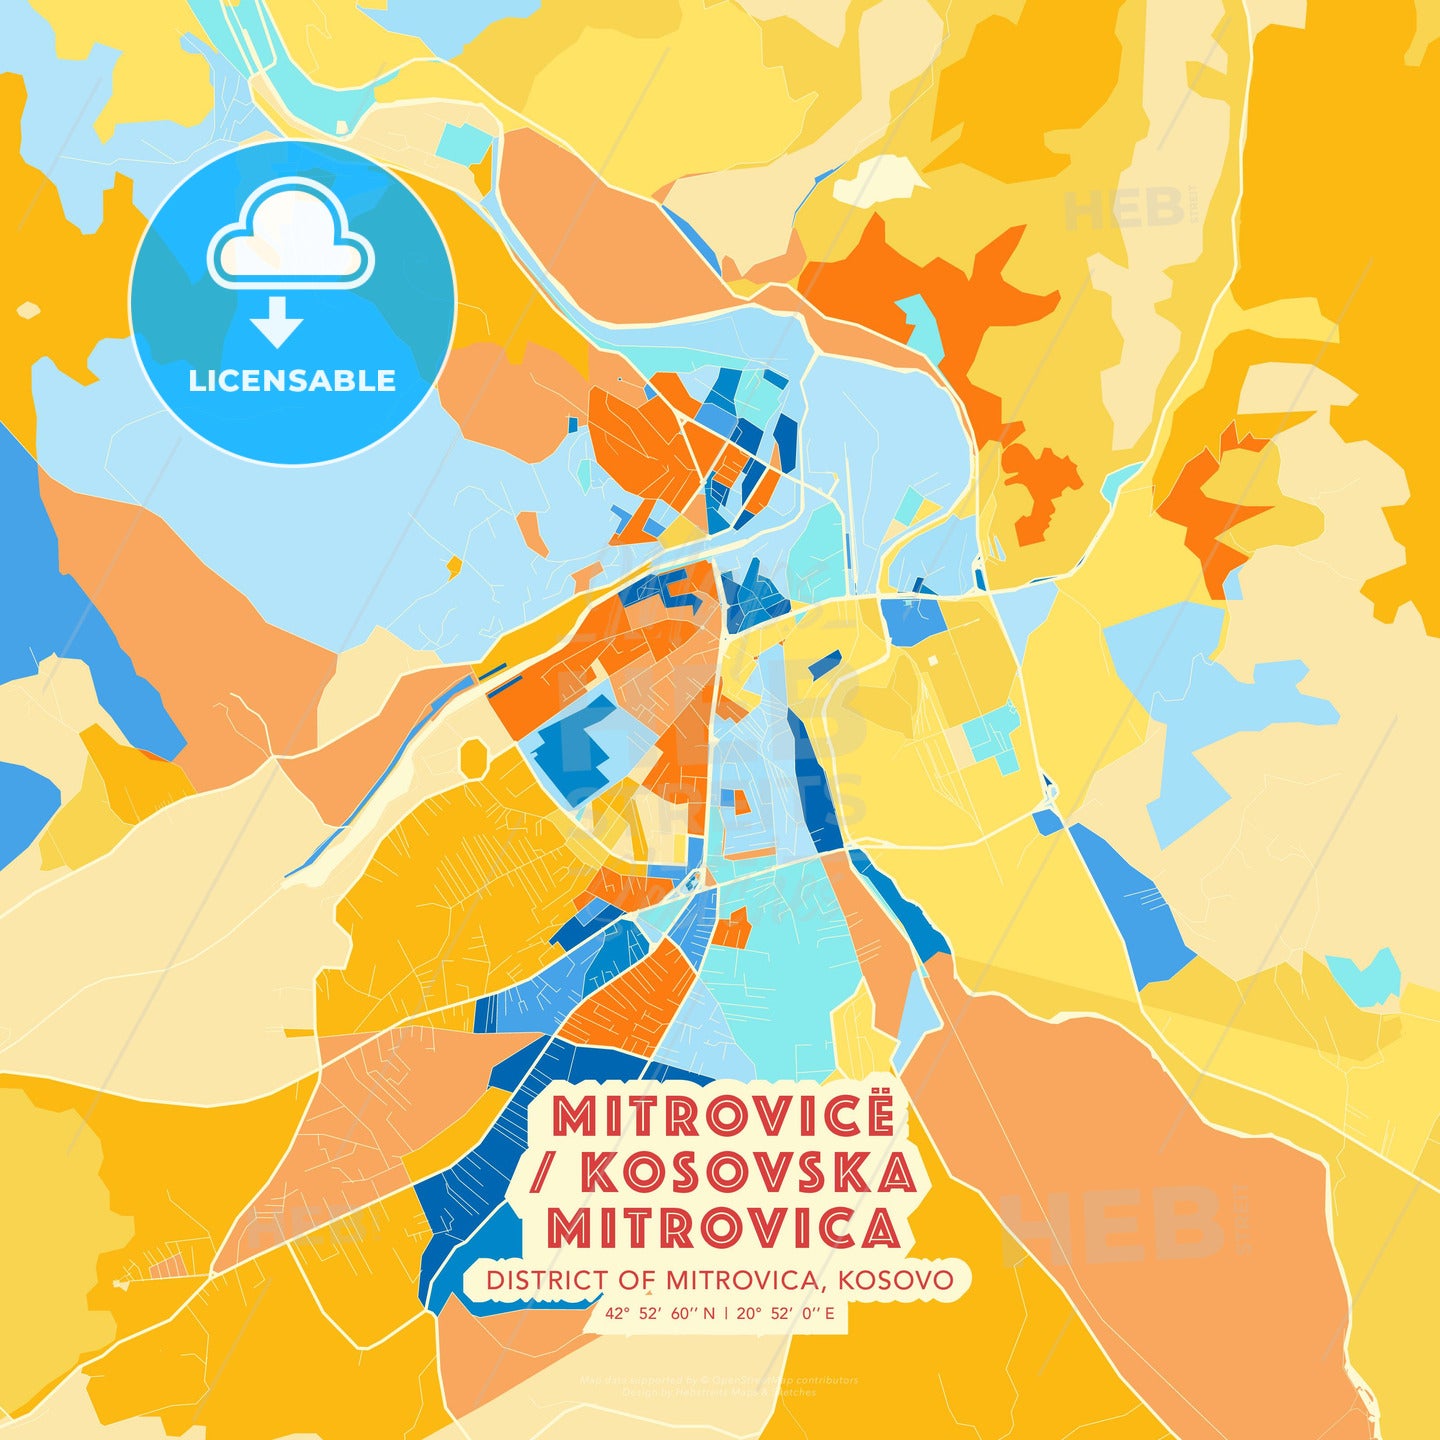 Mitrovicë / Kosovska Mitrovica, District of Mitrovica, Kosovo, map - HEBSTREITS Sketches